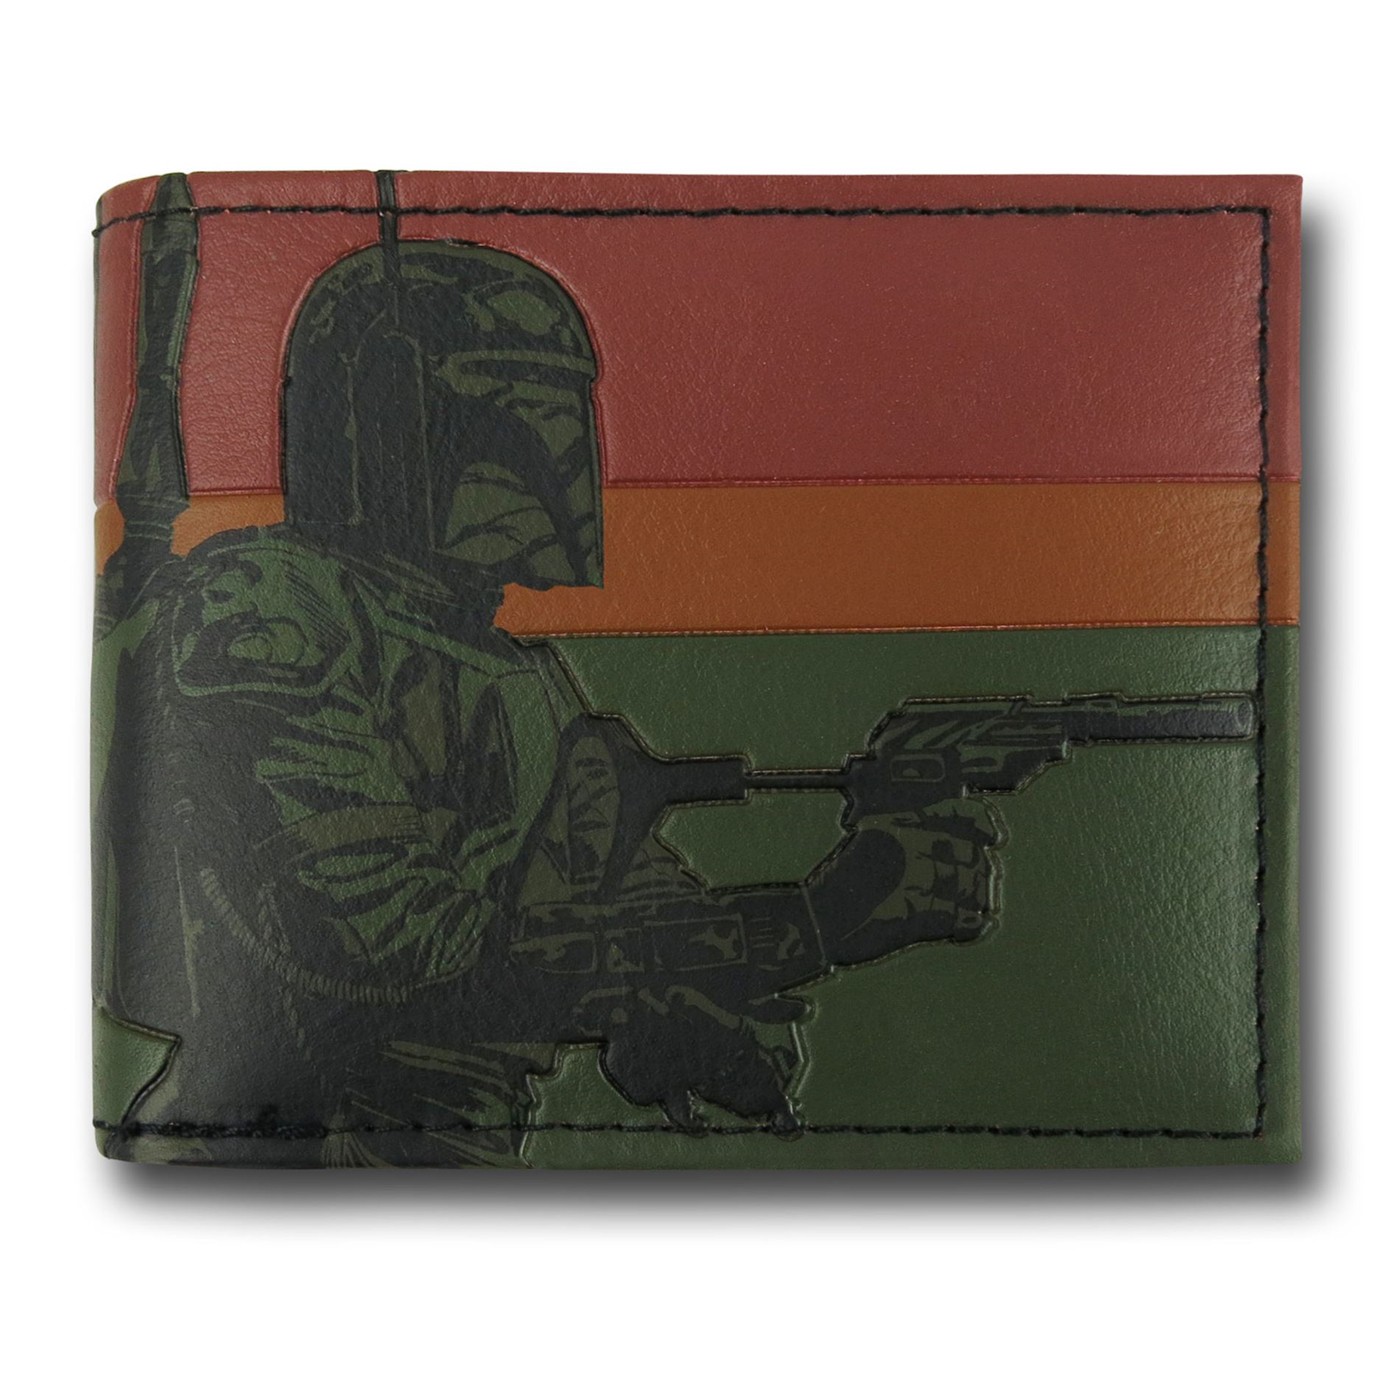 Star Wars Boba Fett Tri-Color Bi-Fold Wallet